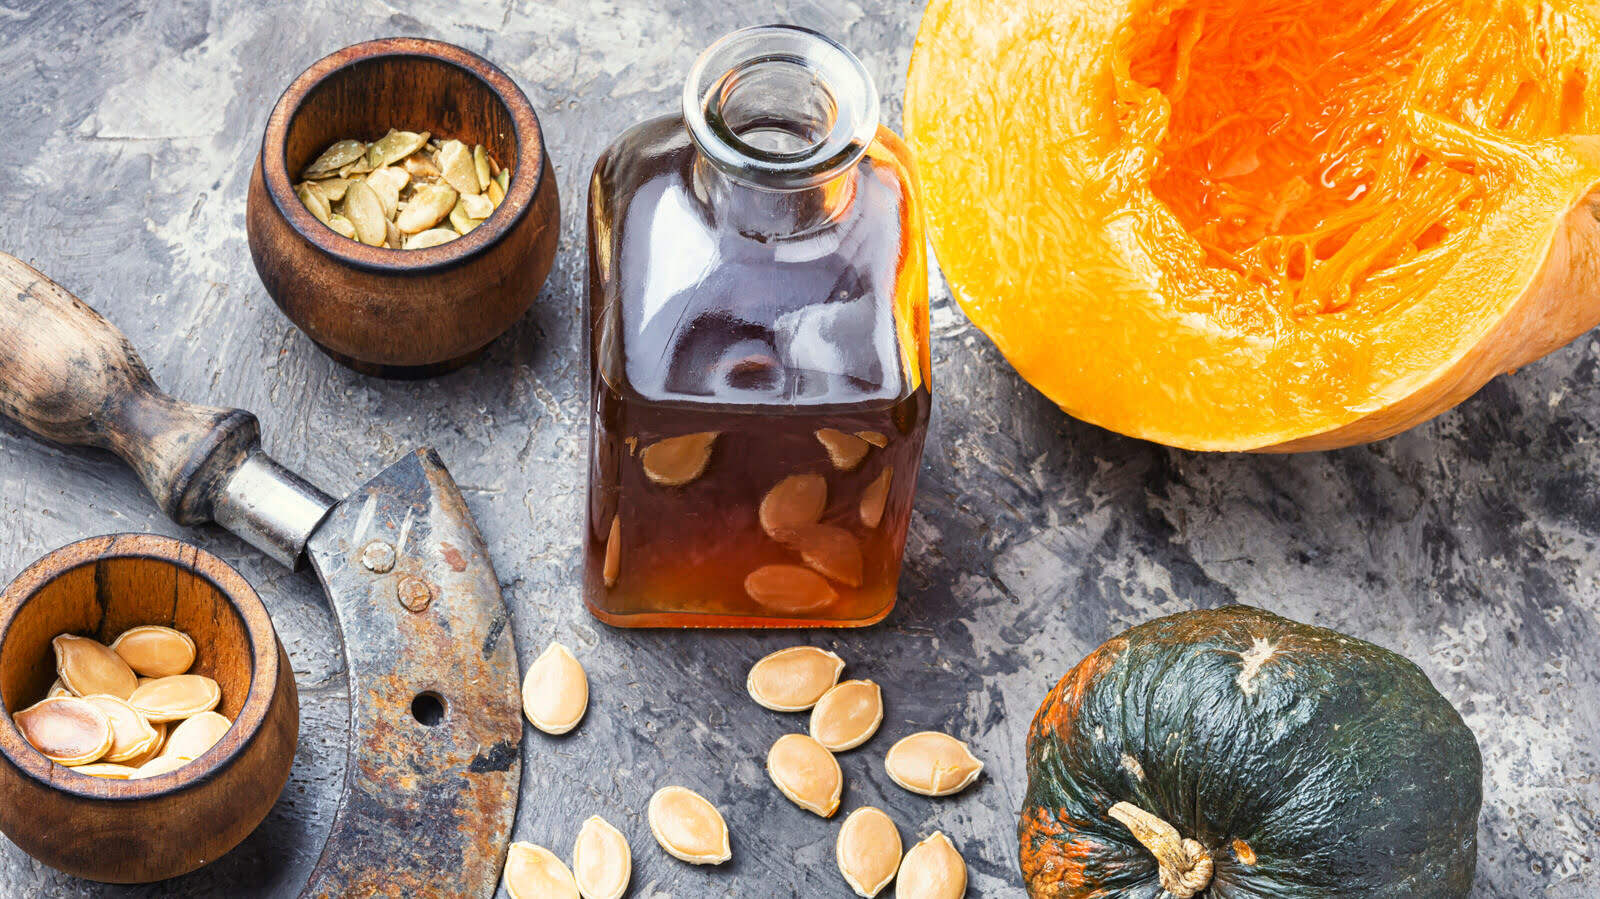 How To Make Pumpkin Seed Oil